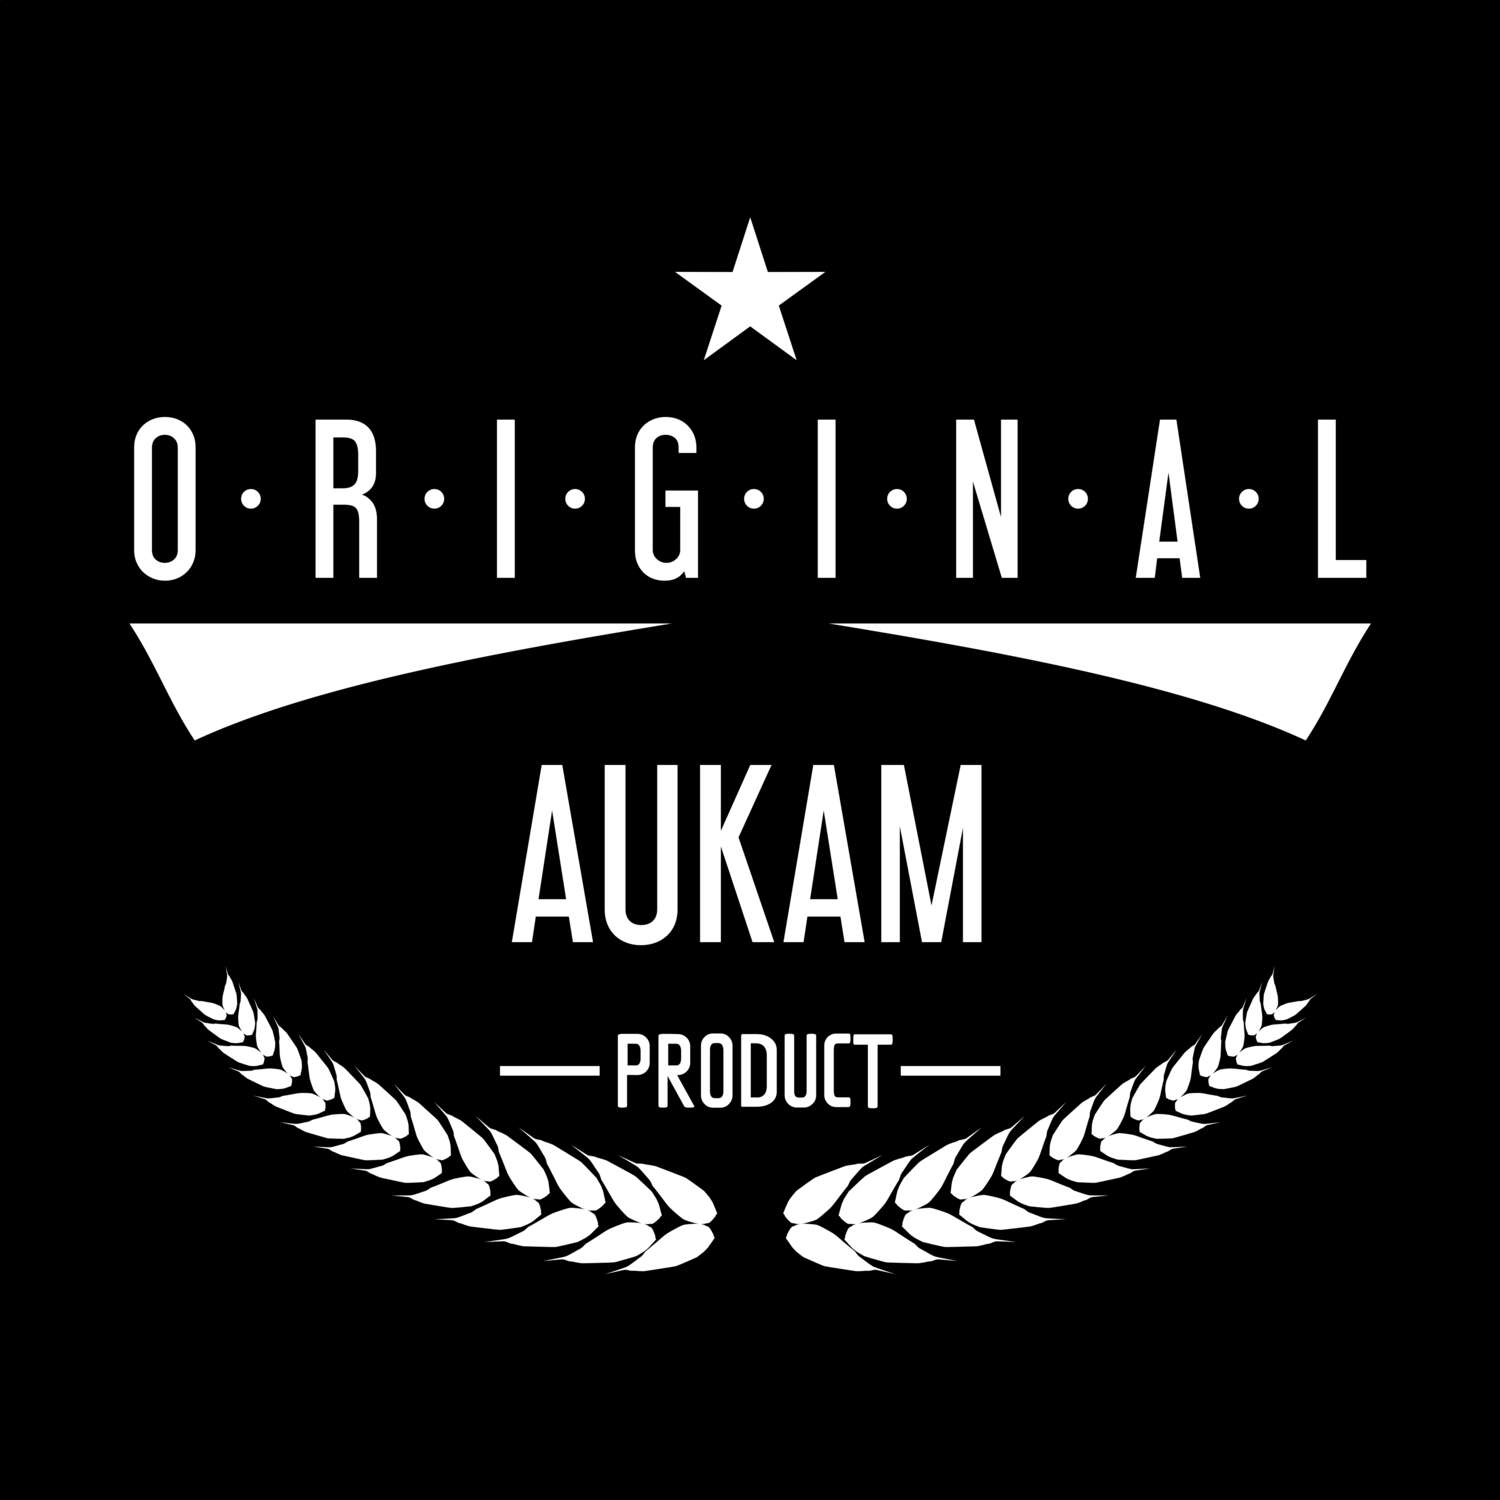 Aukam T-Shirt »Original Product«